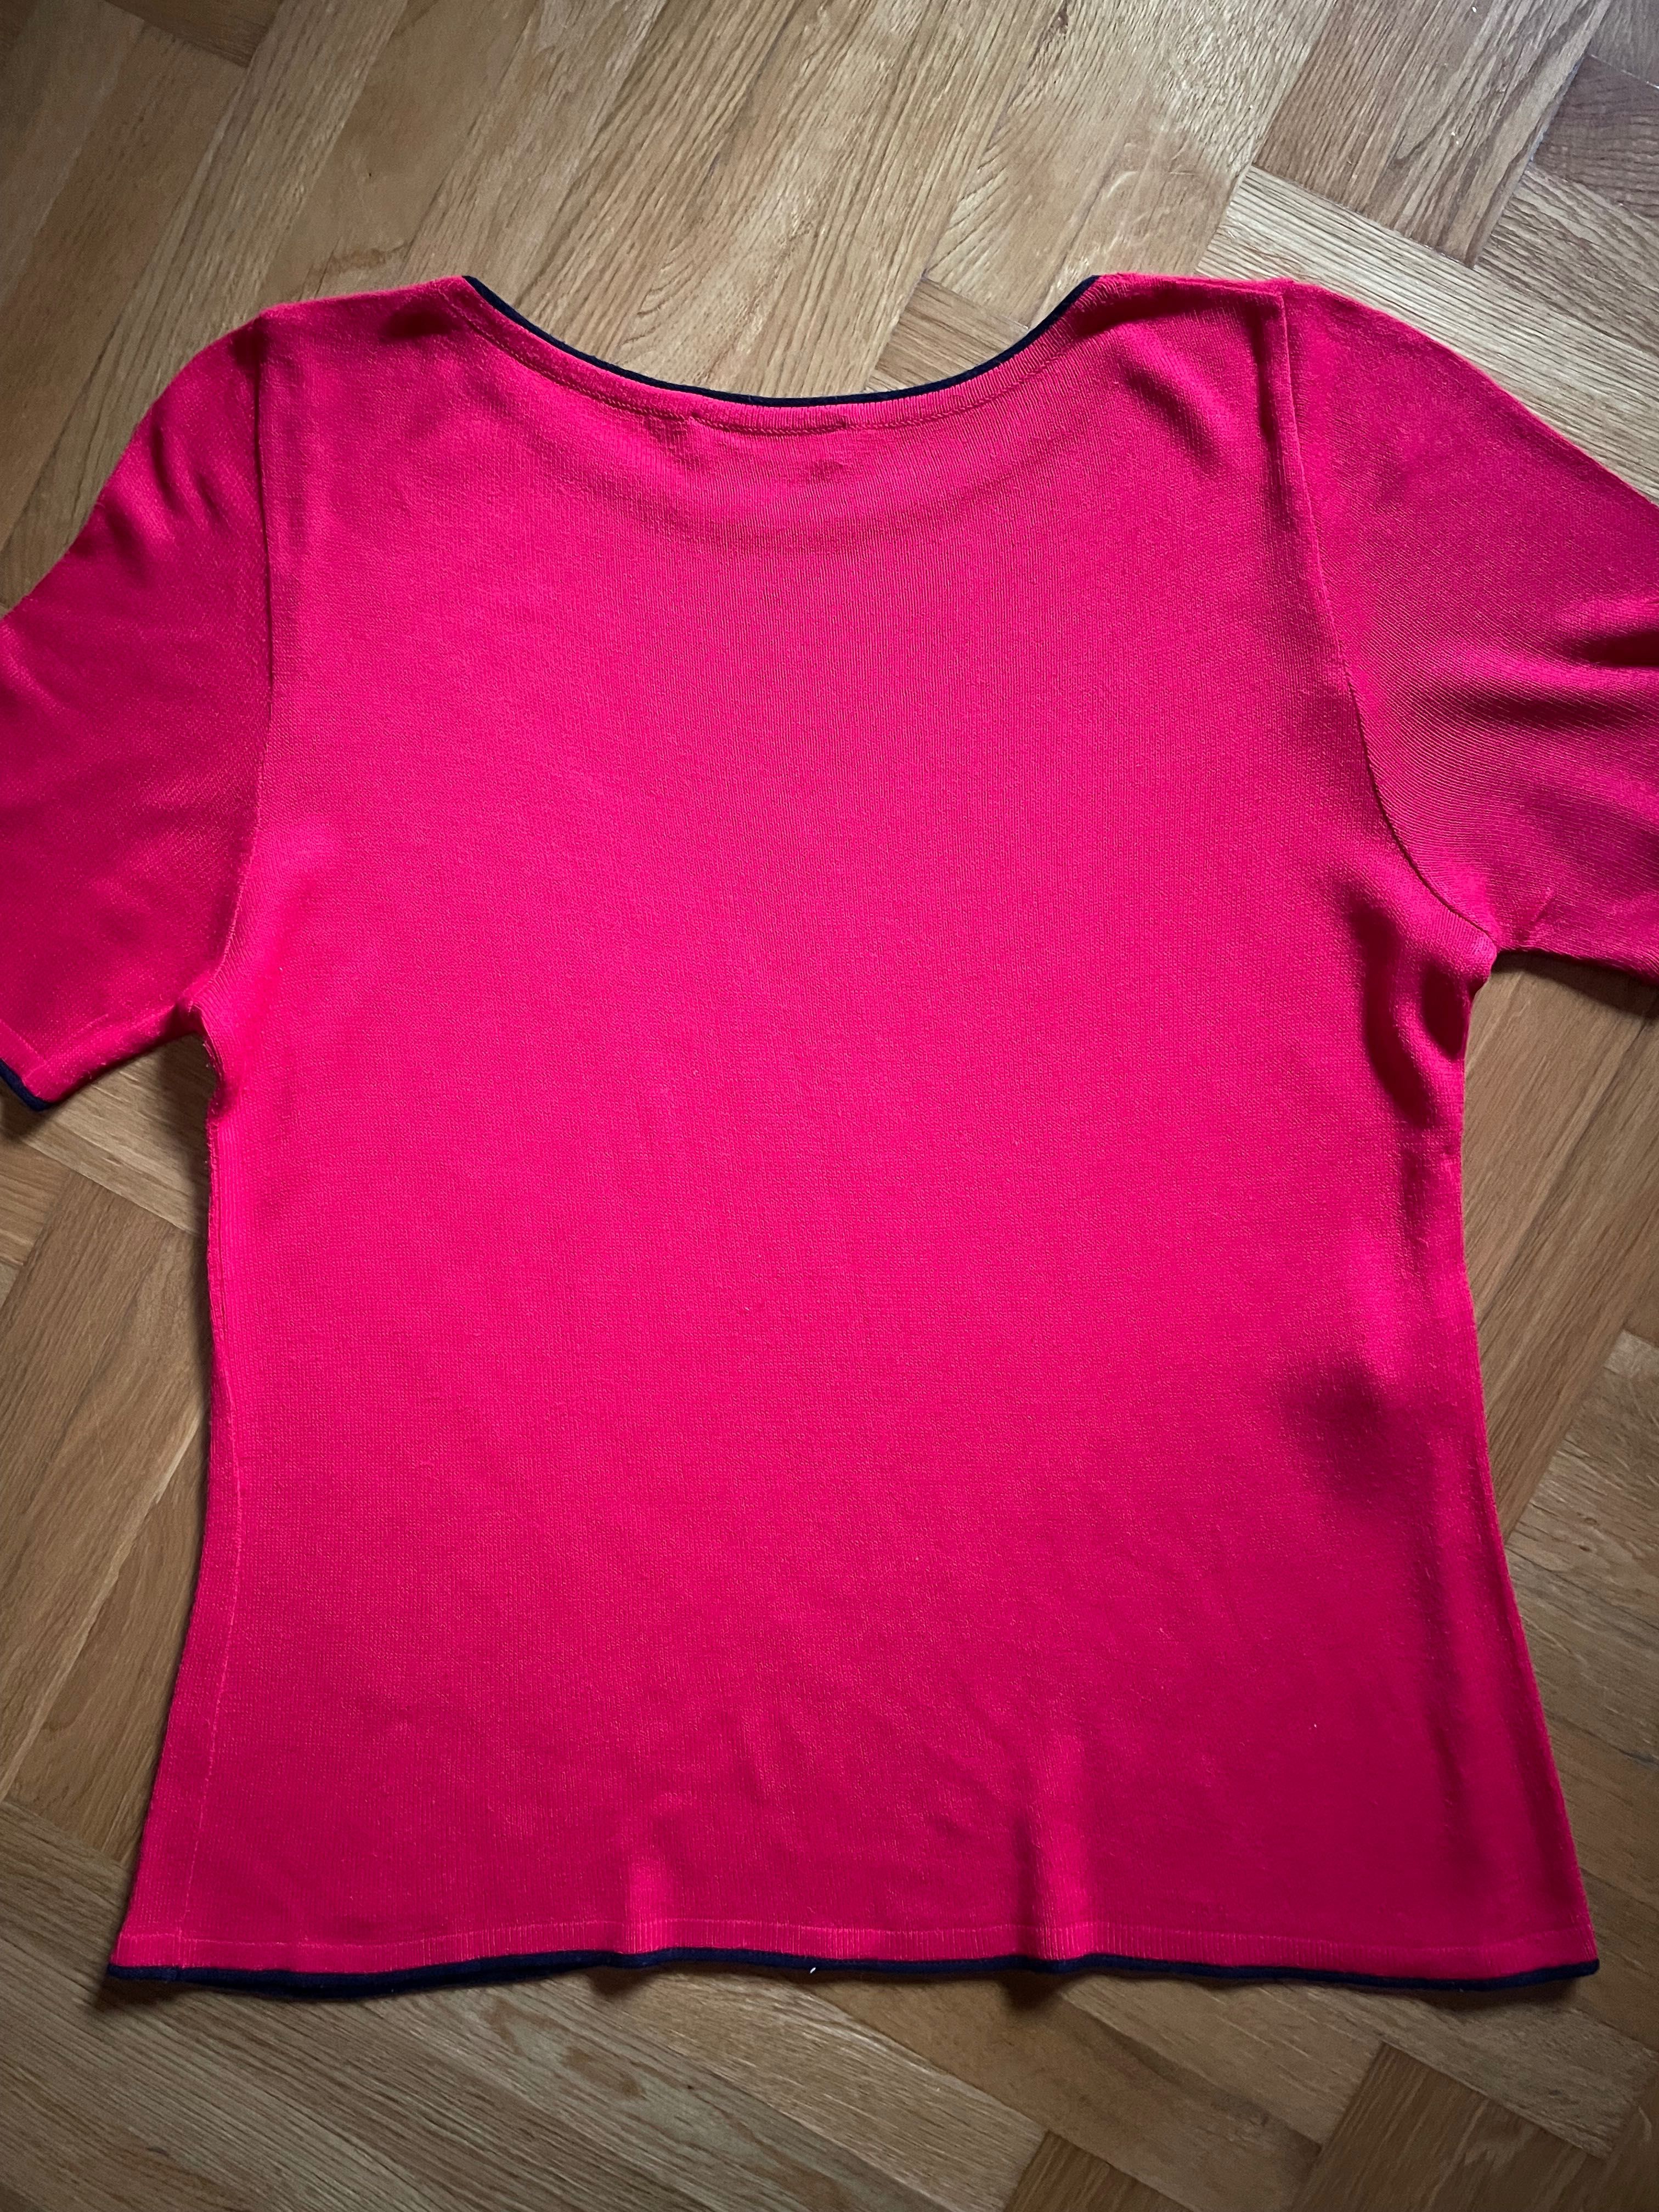 Piękna elegancka bluzka czerwona Davernos rozmiar 40/42